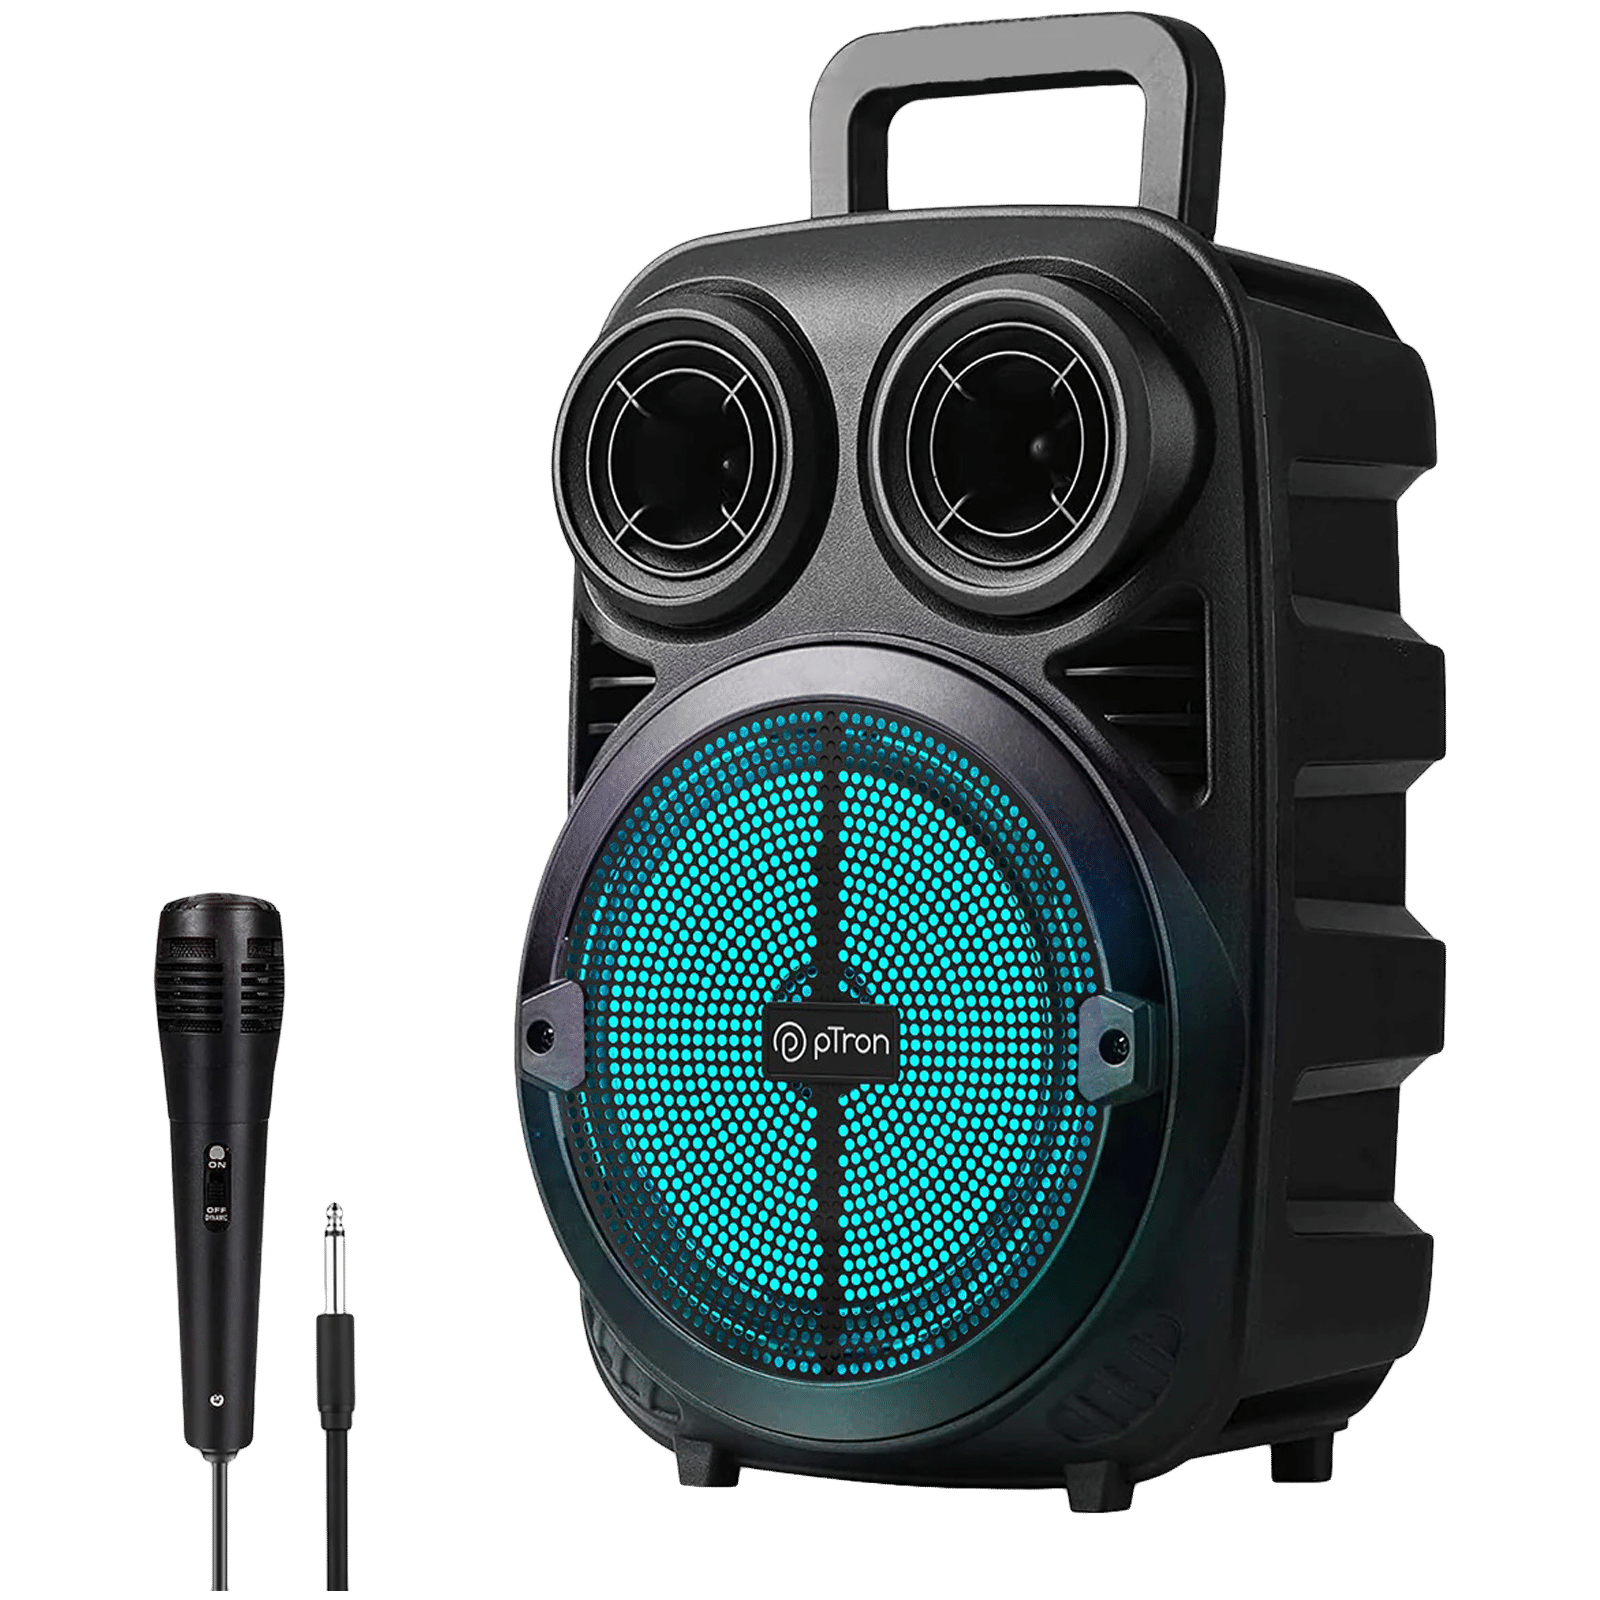 ptron bluetooth speakers: 8 pTron Bluetooth Speakers to enhance